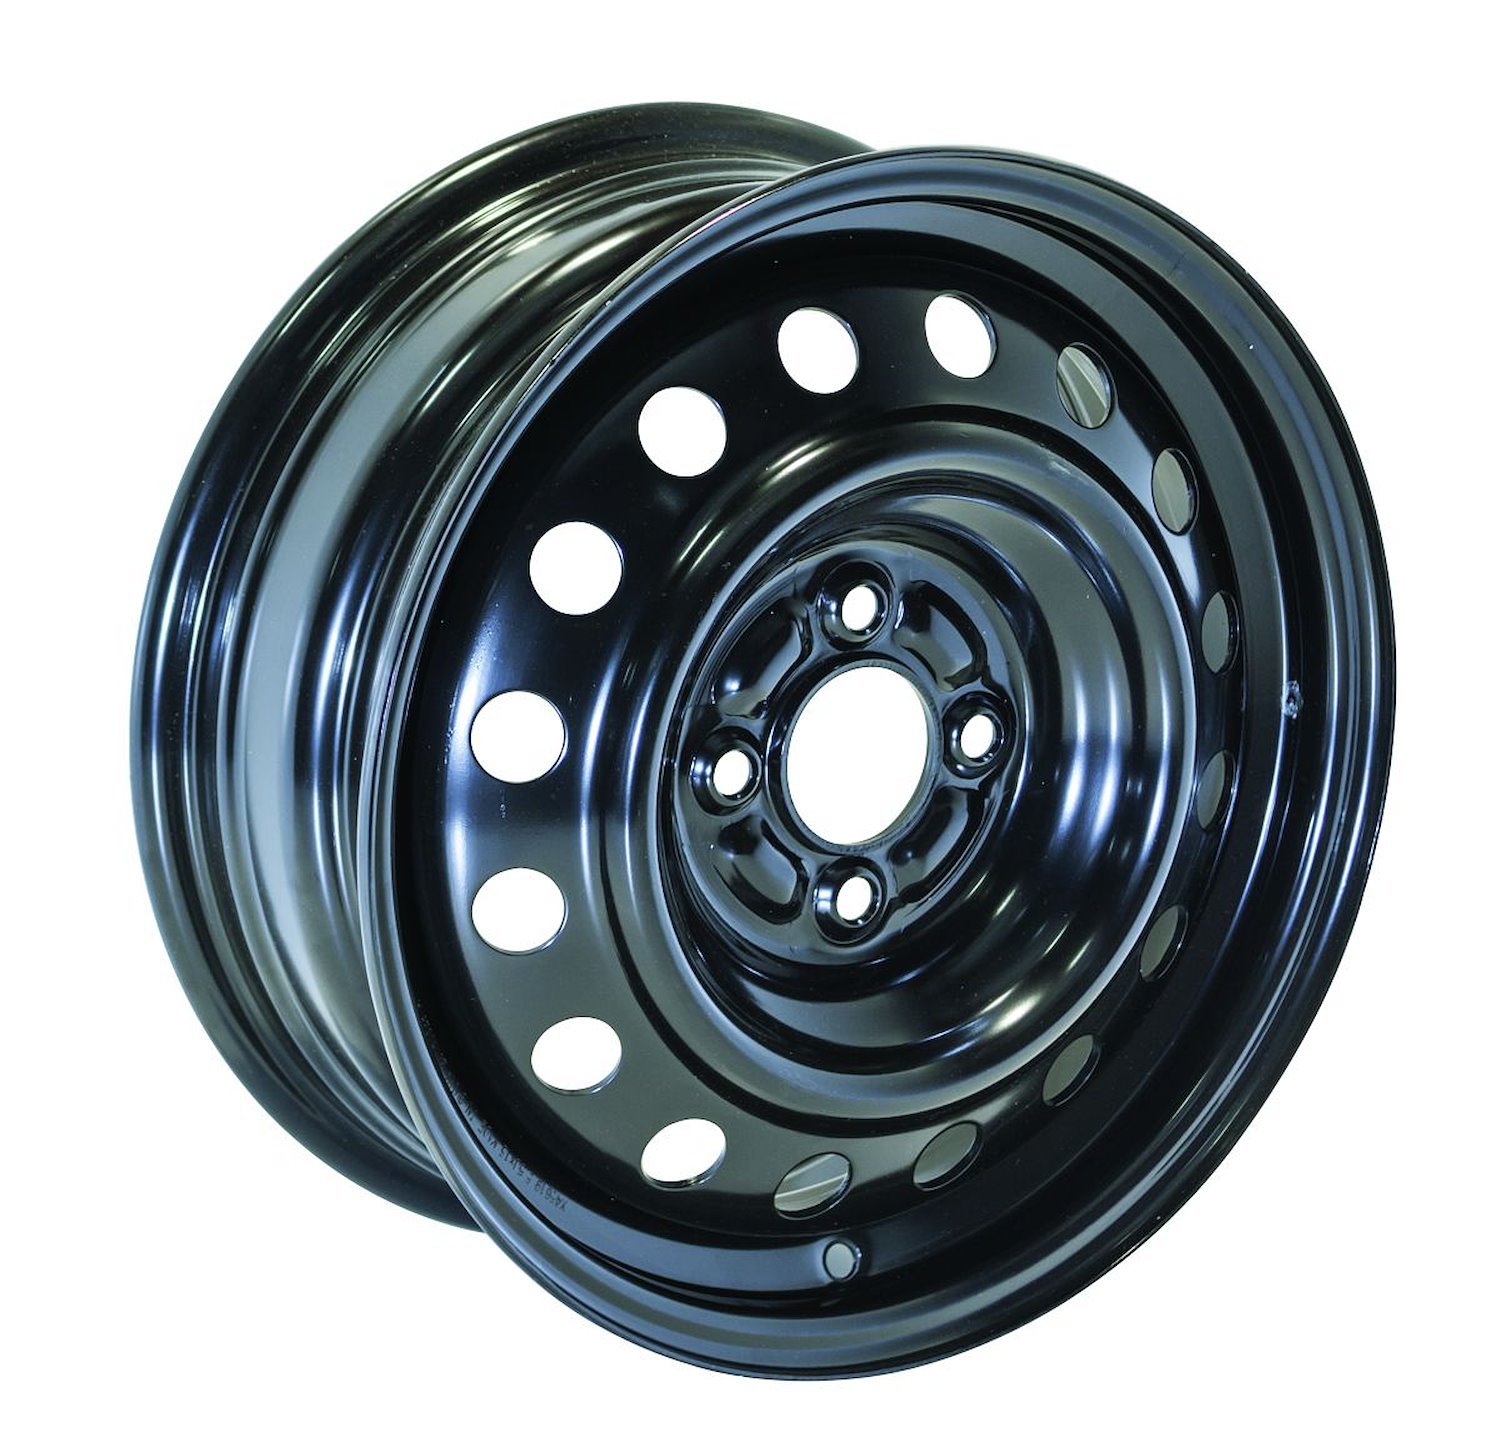 X45619 Steel Wheel [Size: 15" x 5.50"] Black Finish